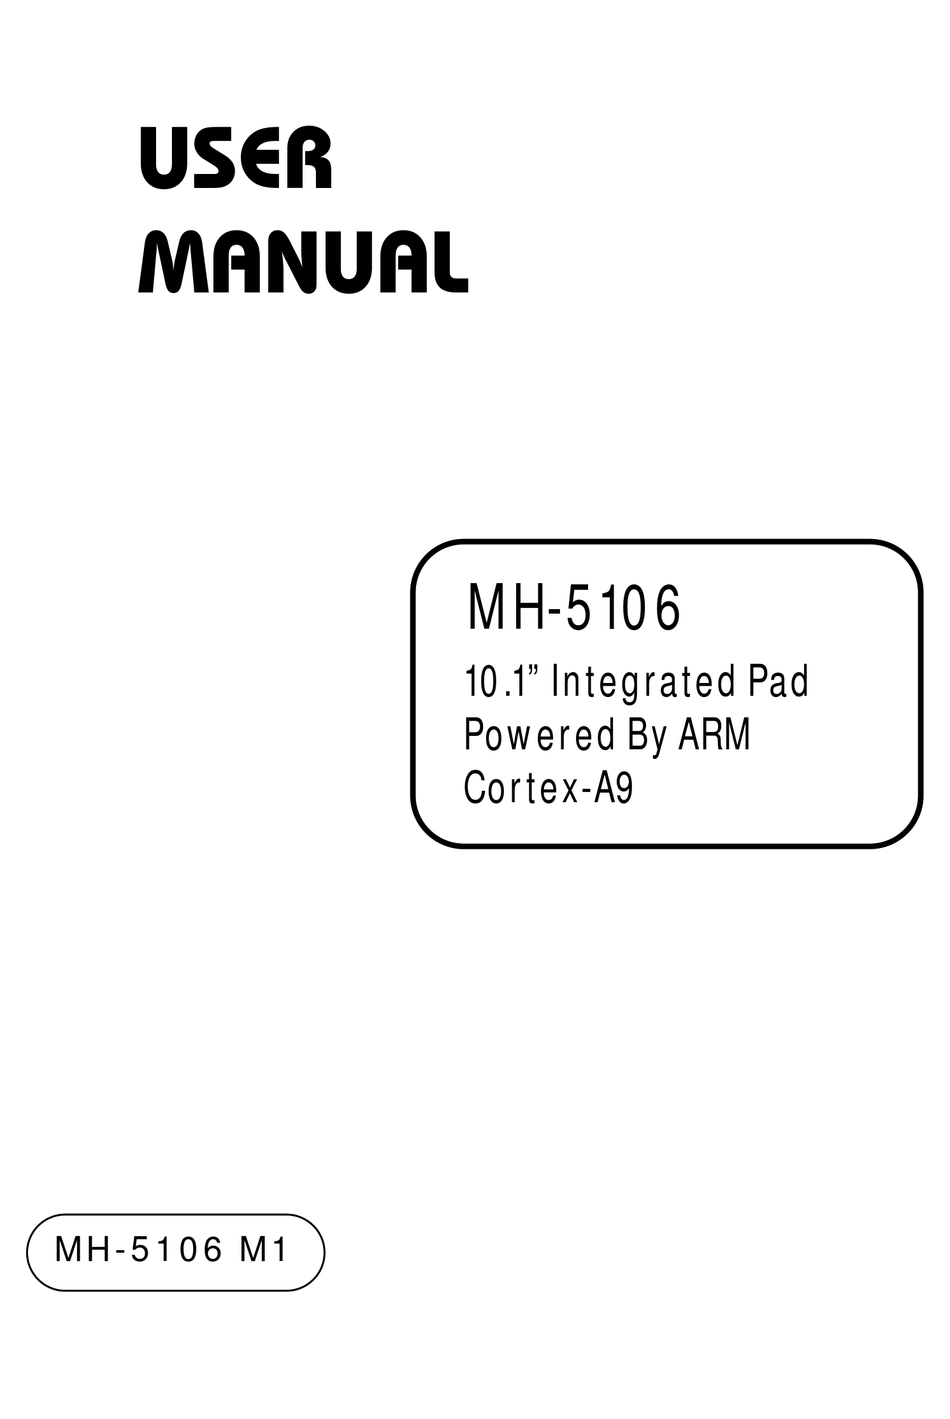 prox-mh-5106-user-manual-pdf-download-manualslib